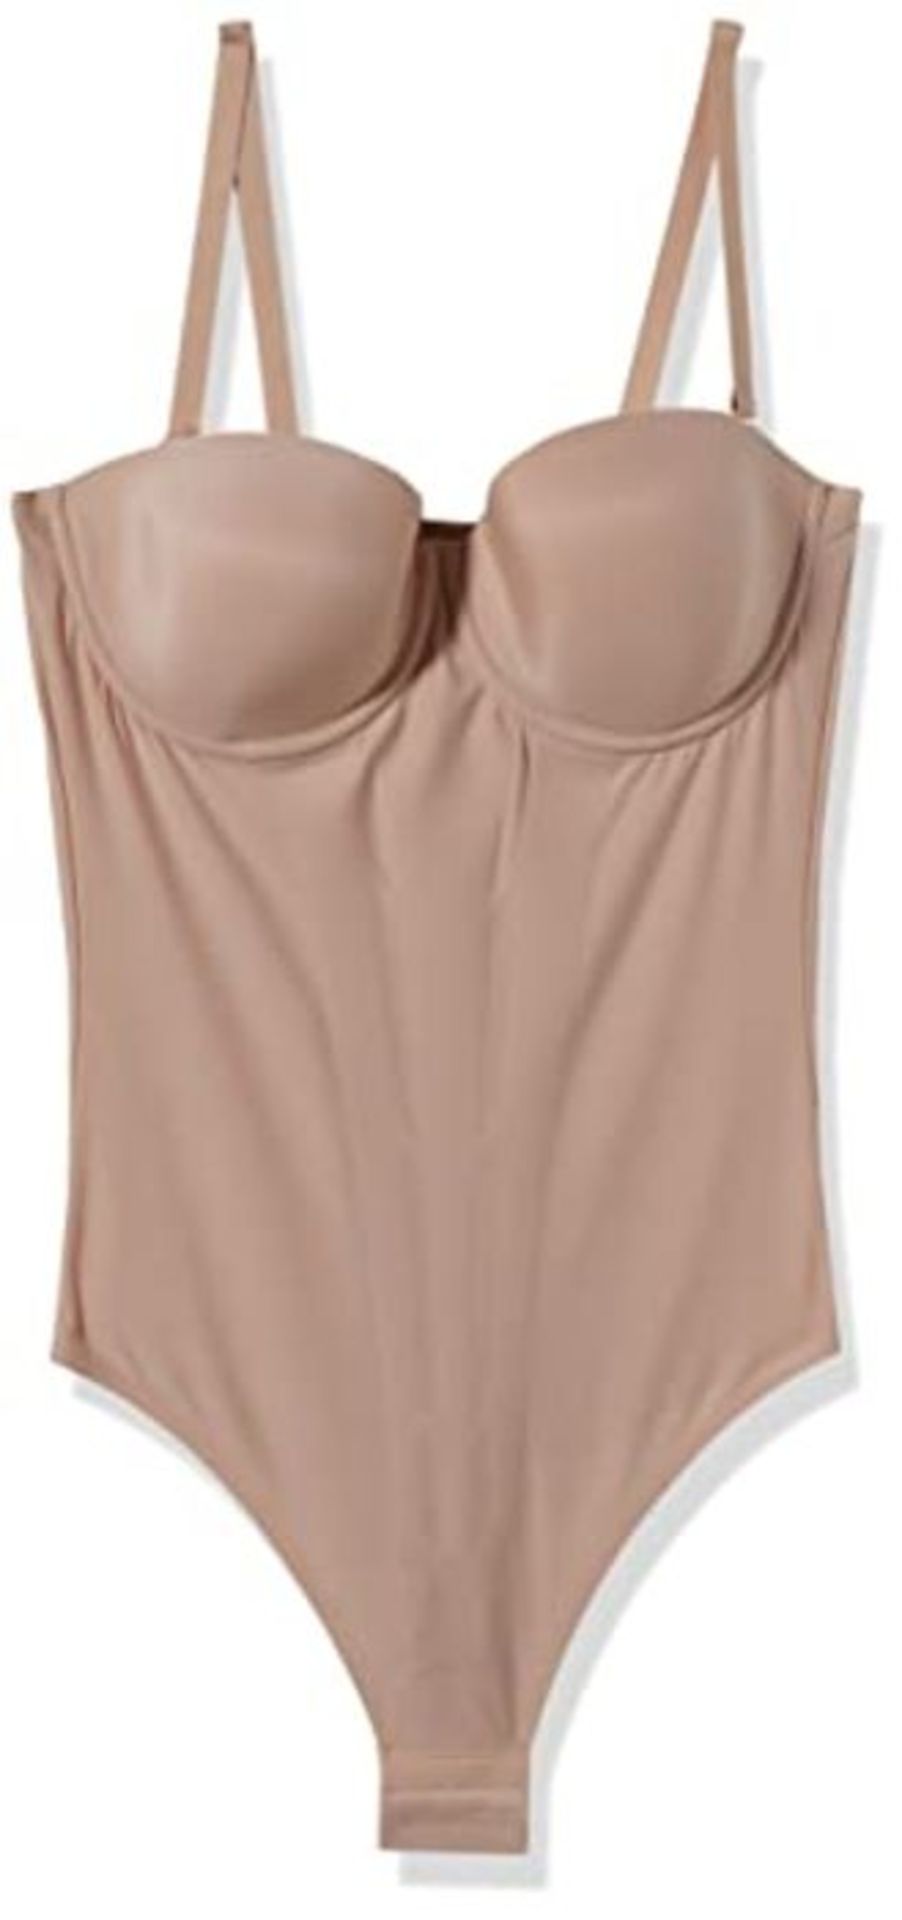 RRP £61.00 Triumph Women's Shape Smart Bswdp Underwear, Neutral Beige, 38C